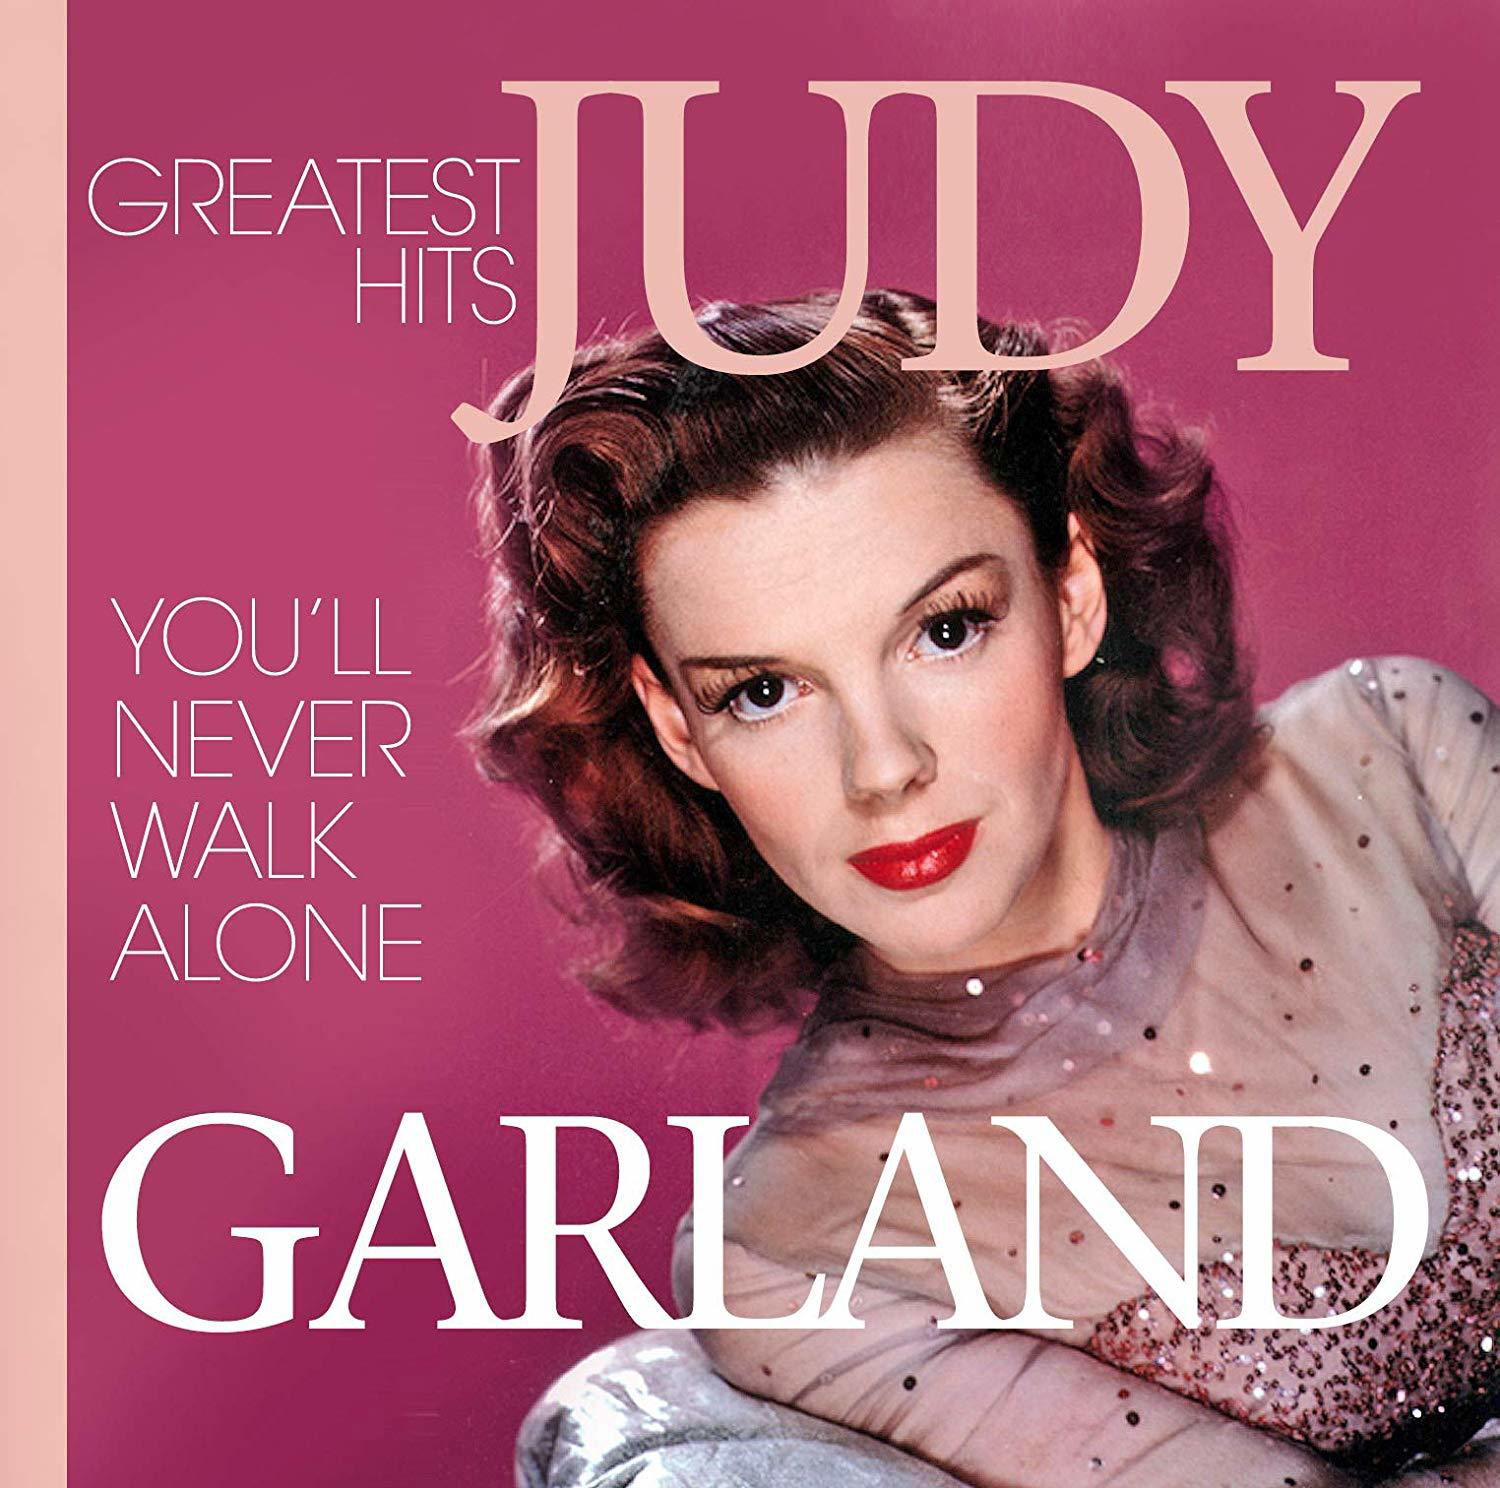 Walk Alone-Greatest (CD) - Never - You Garland Judy Hits